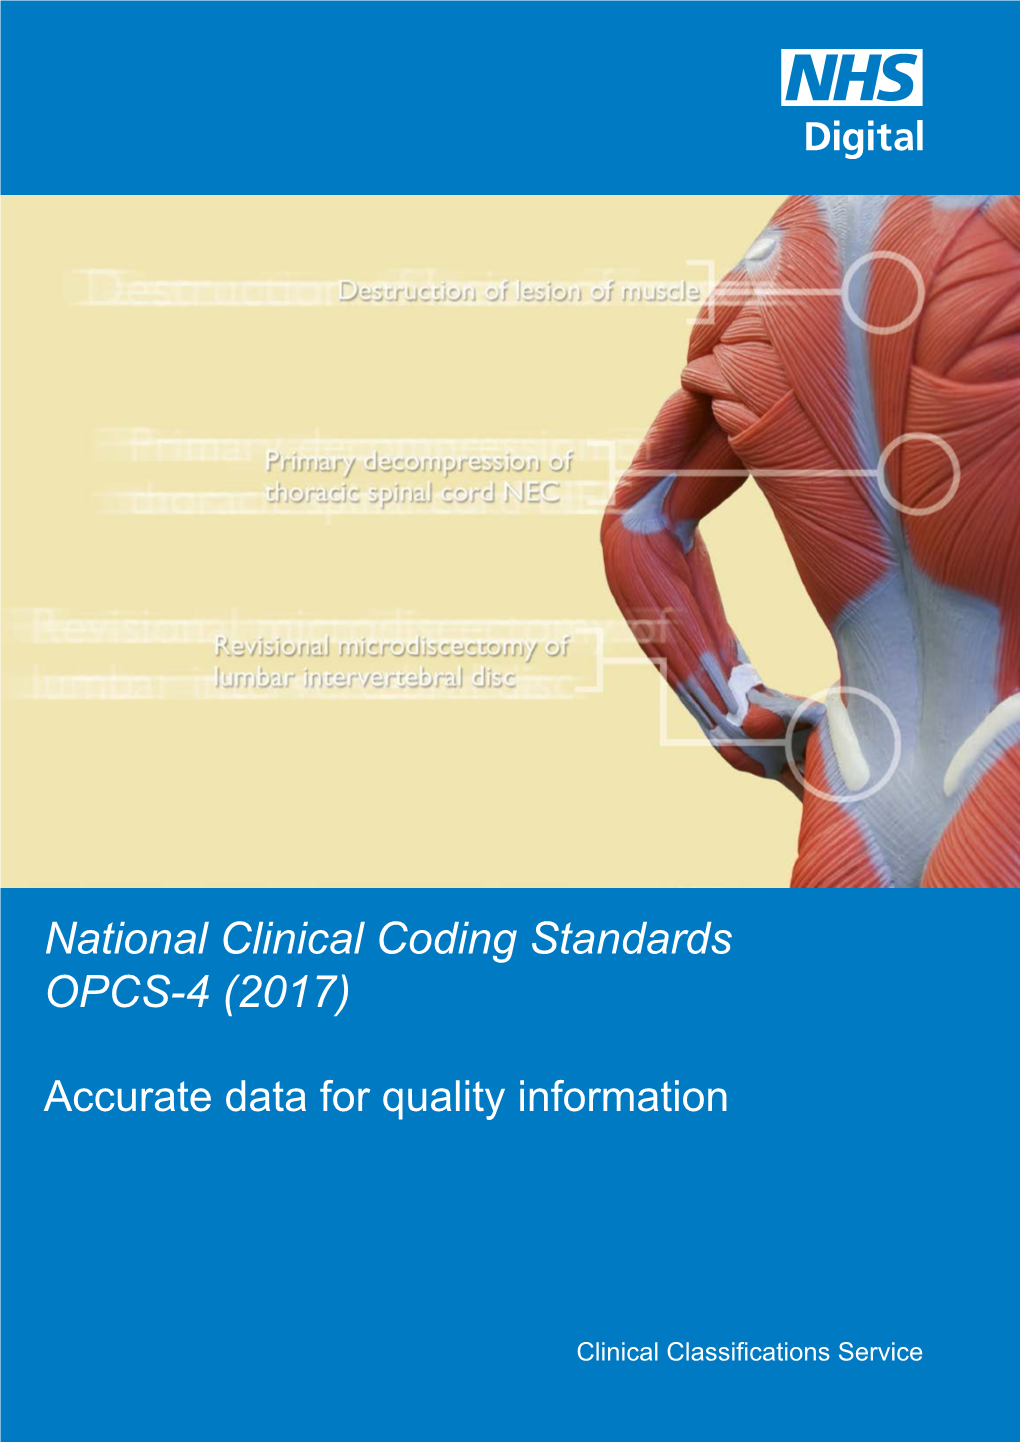 National Clinical Coding Standards OPCS-4 (2017)